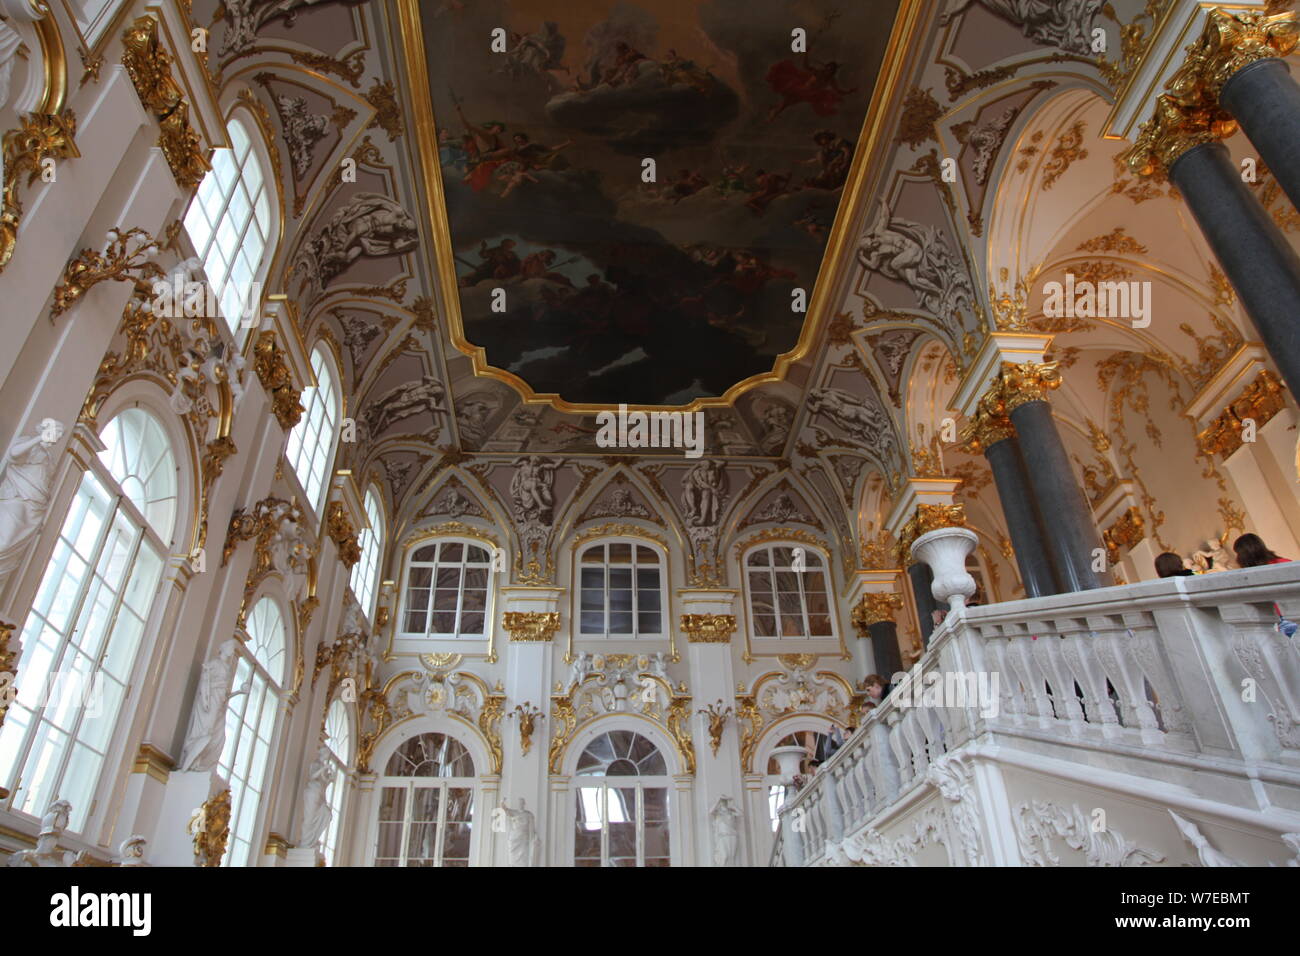 Main staircase of the Winter Palace, Hermitage Museum, St Petersburg, Russia. Artist: Sheldon Marshall Stock Photo